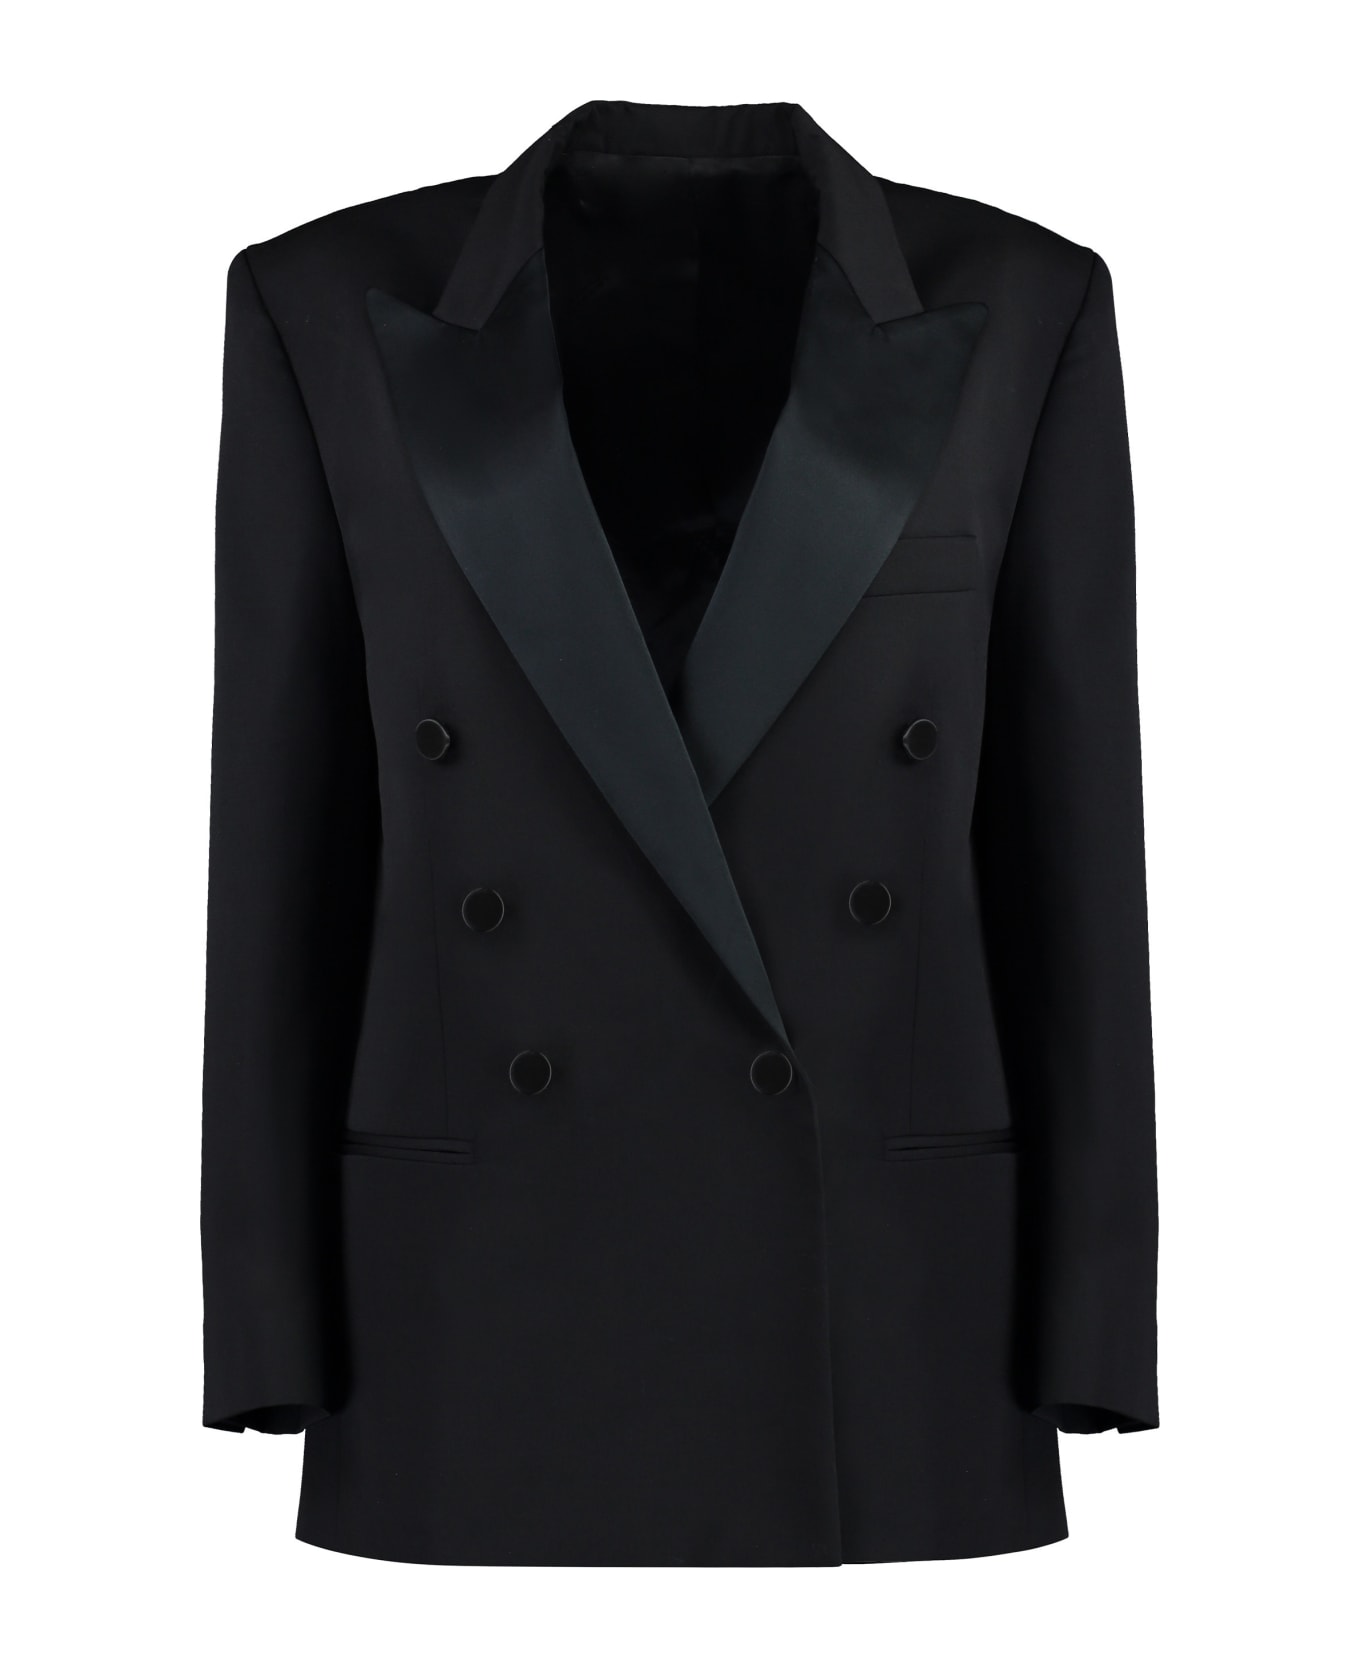 Isabel Marant Peagan Double-breasted Wool Jacket - black